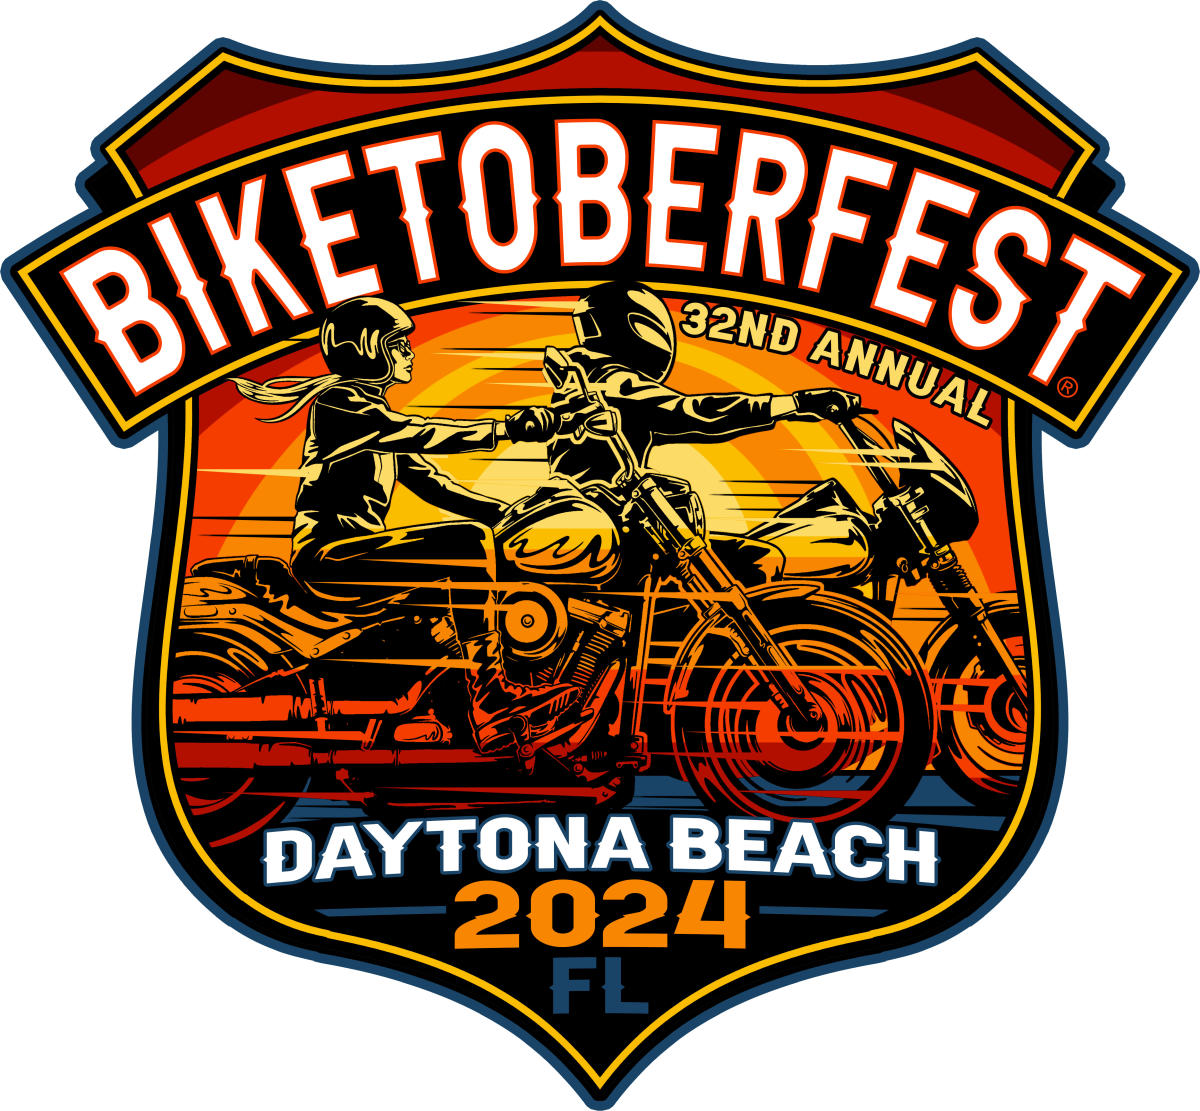 Biketoberfest Vendors Daytona Beach, FL